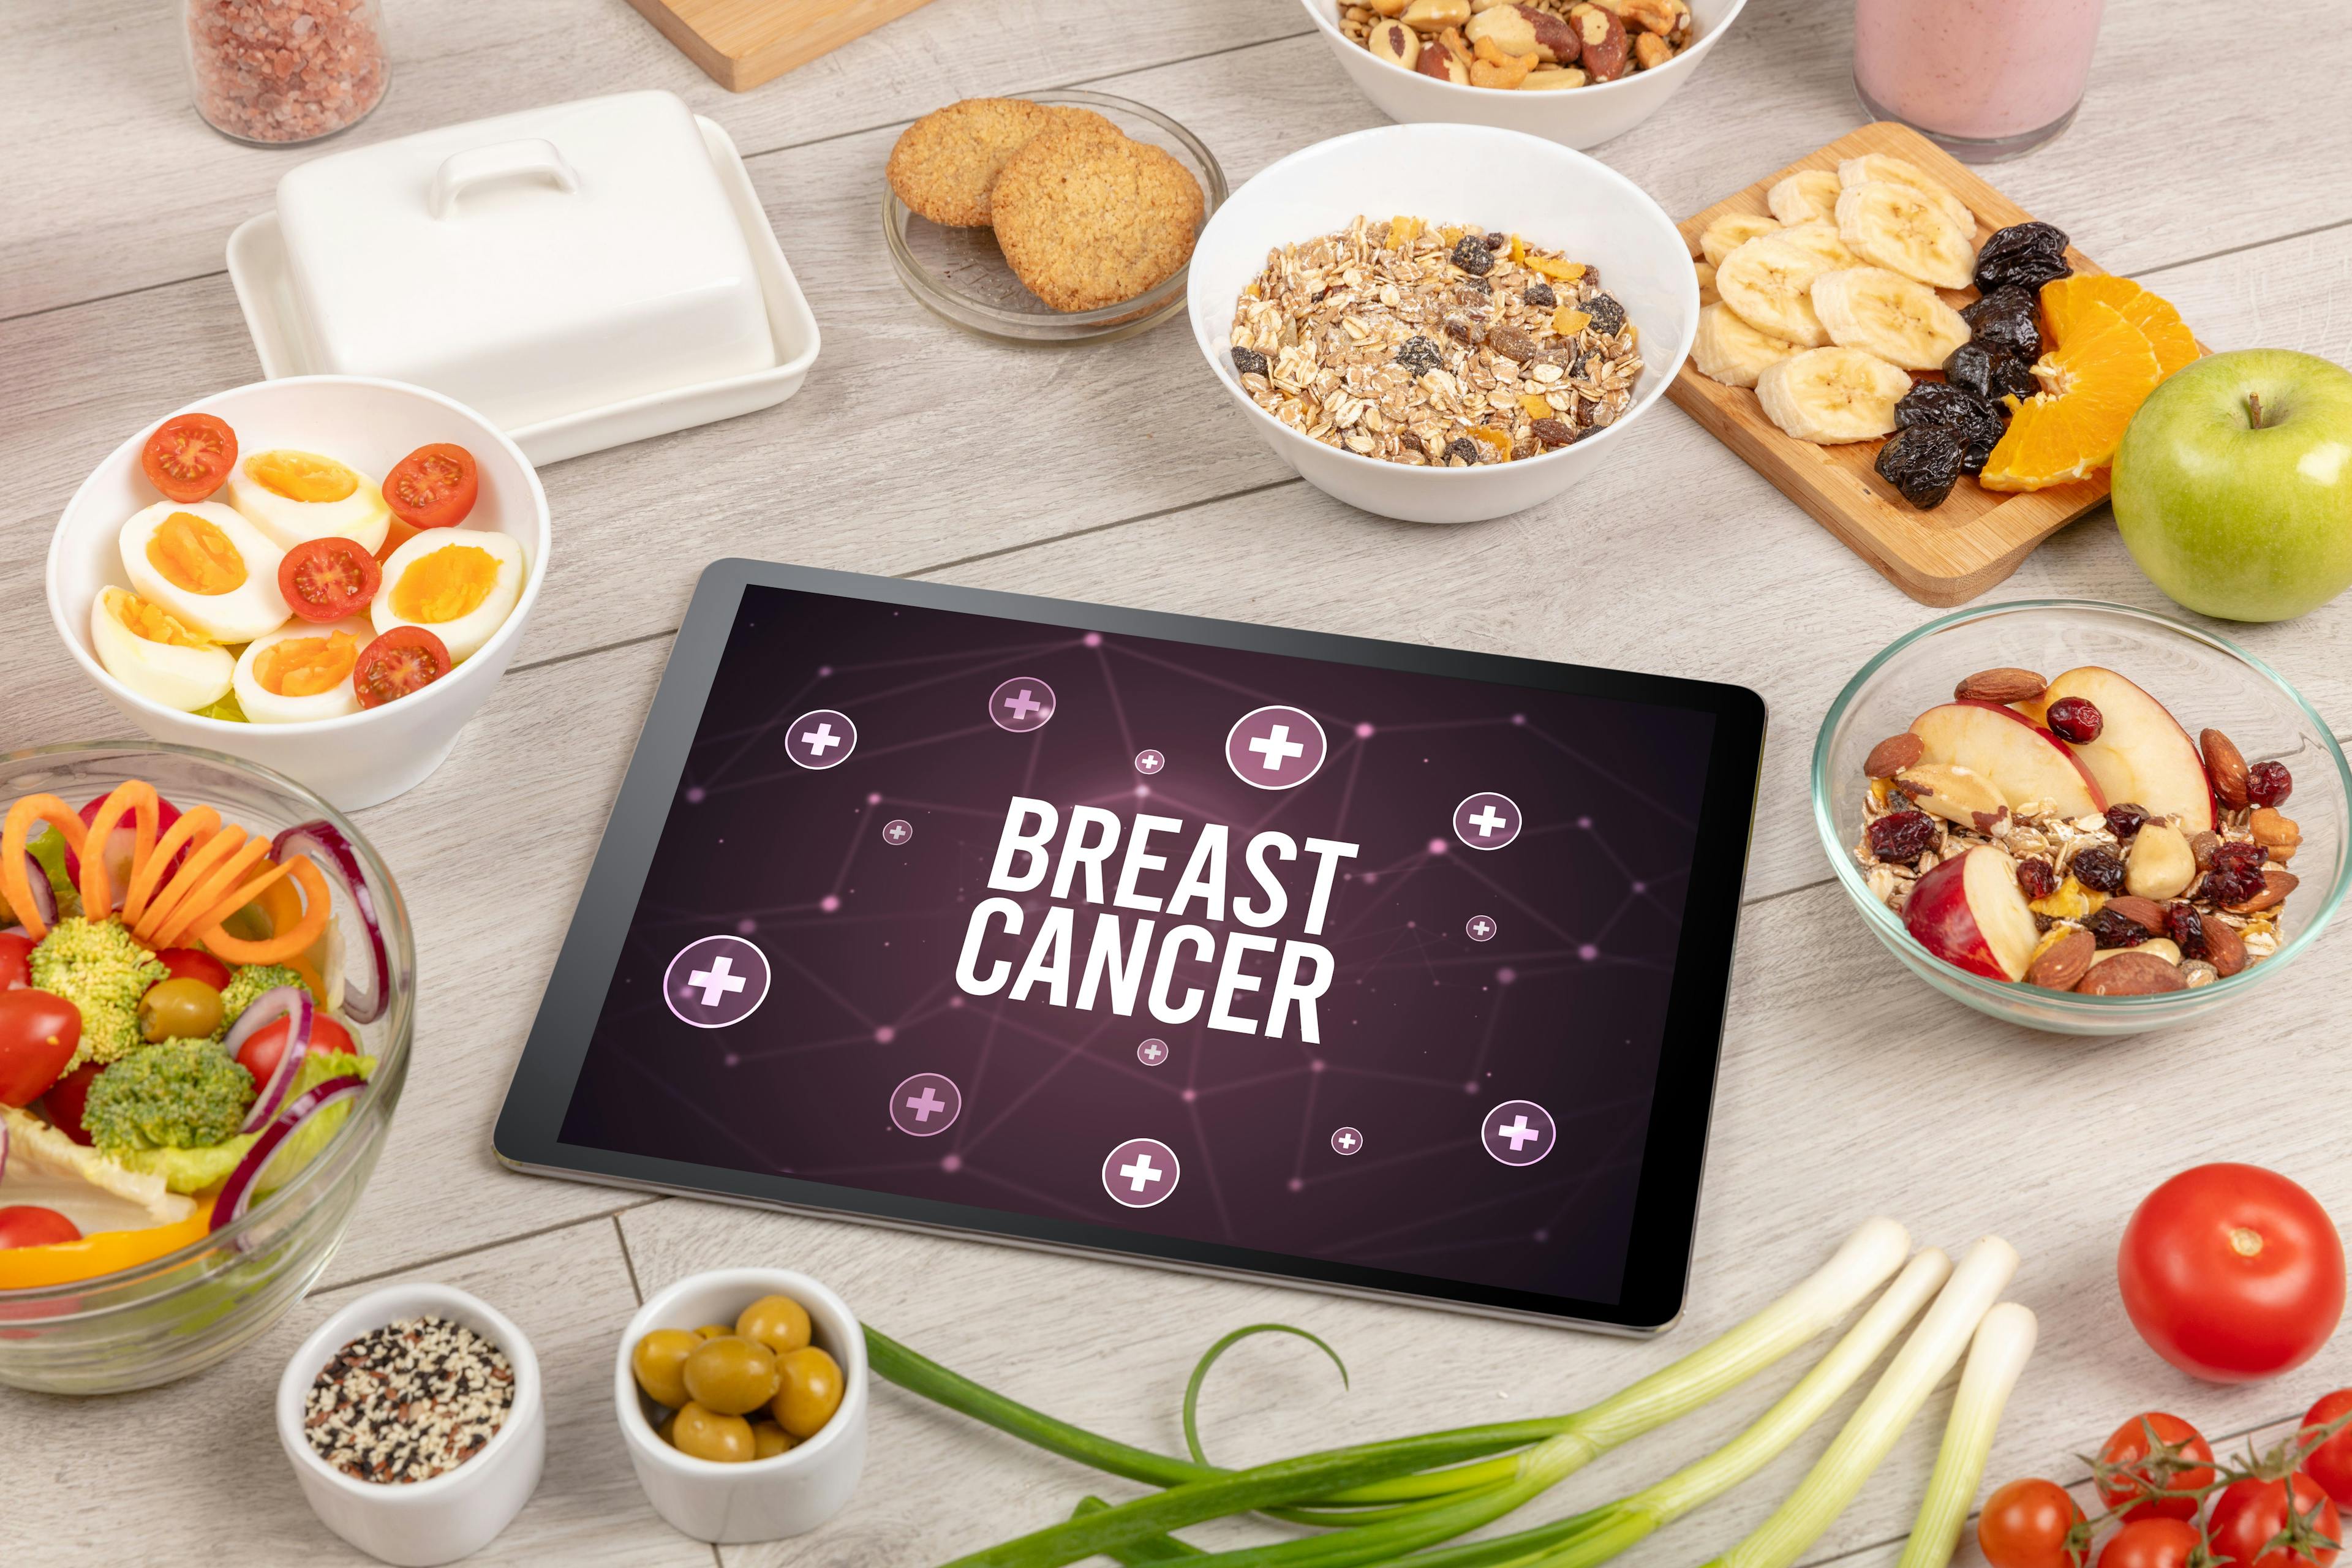 Breast Cancer, Macro-Mediterranean diet| Image Credit: r2 studio - stock.adobe.com